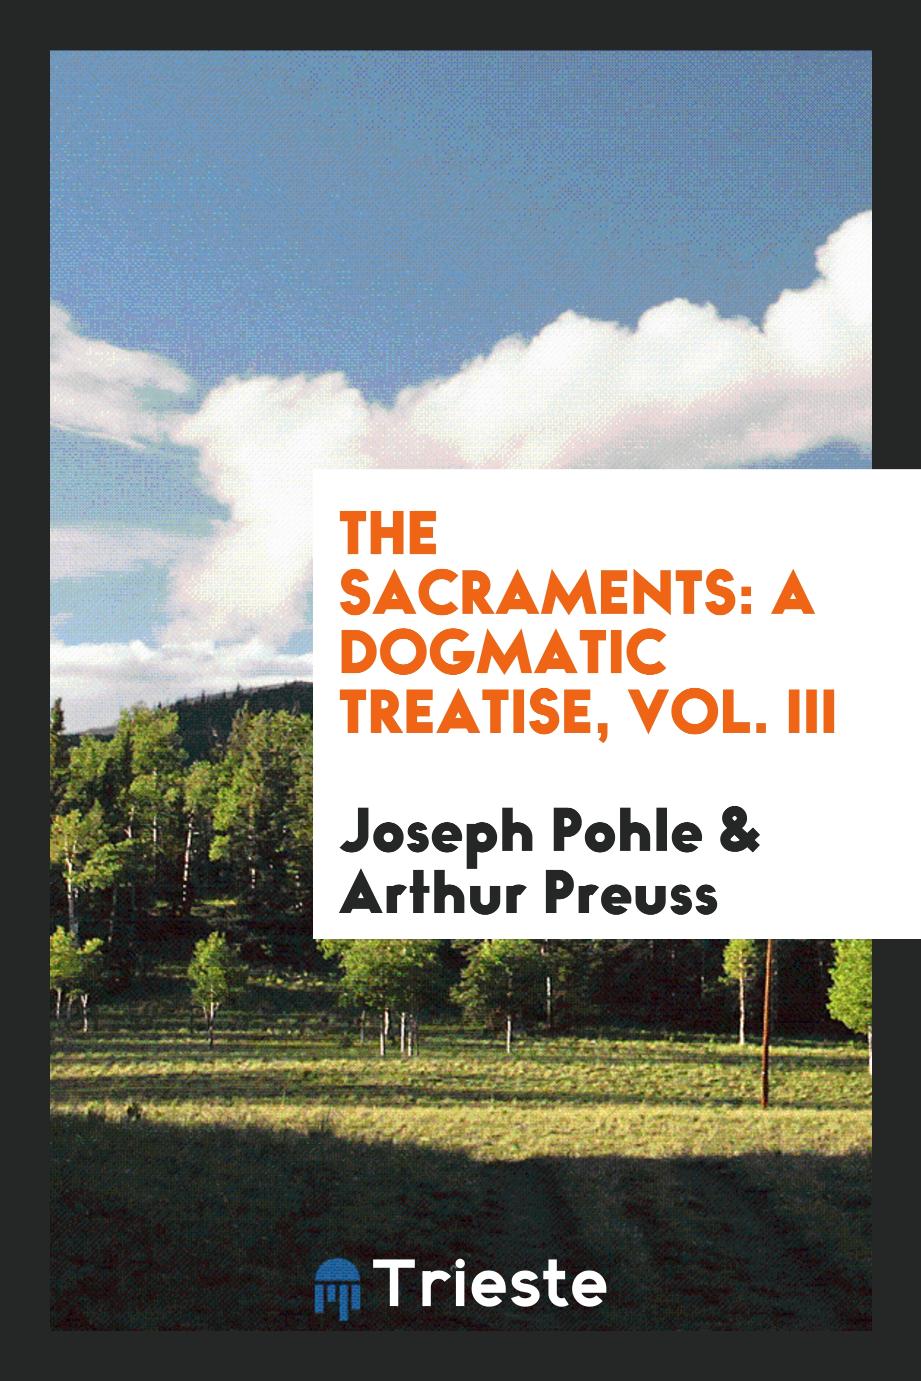 The sacraments: a dogmatic treatise, Vol. III